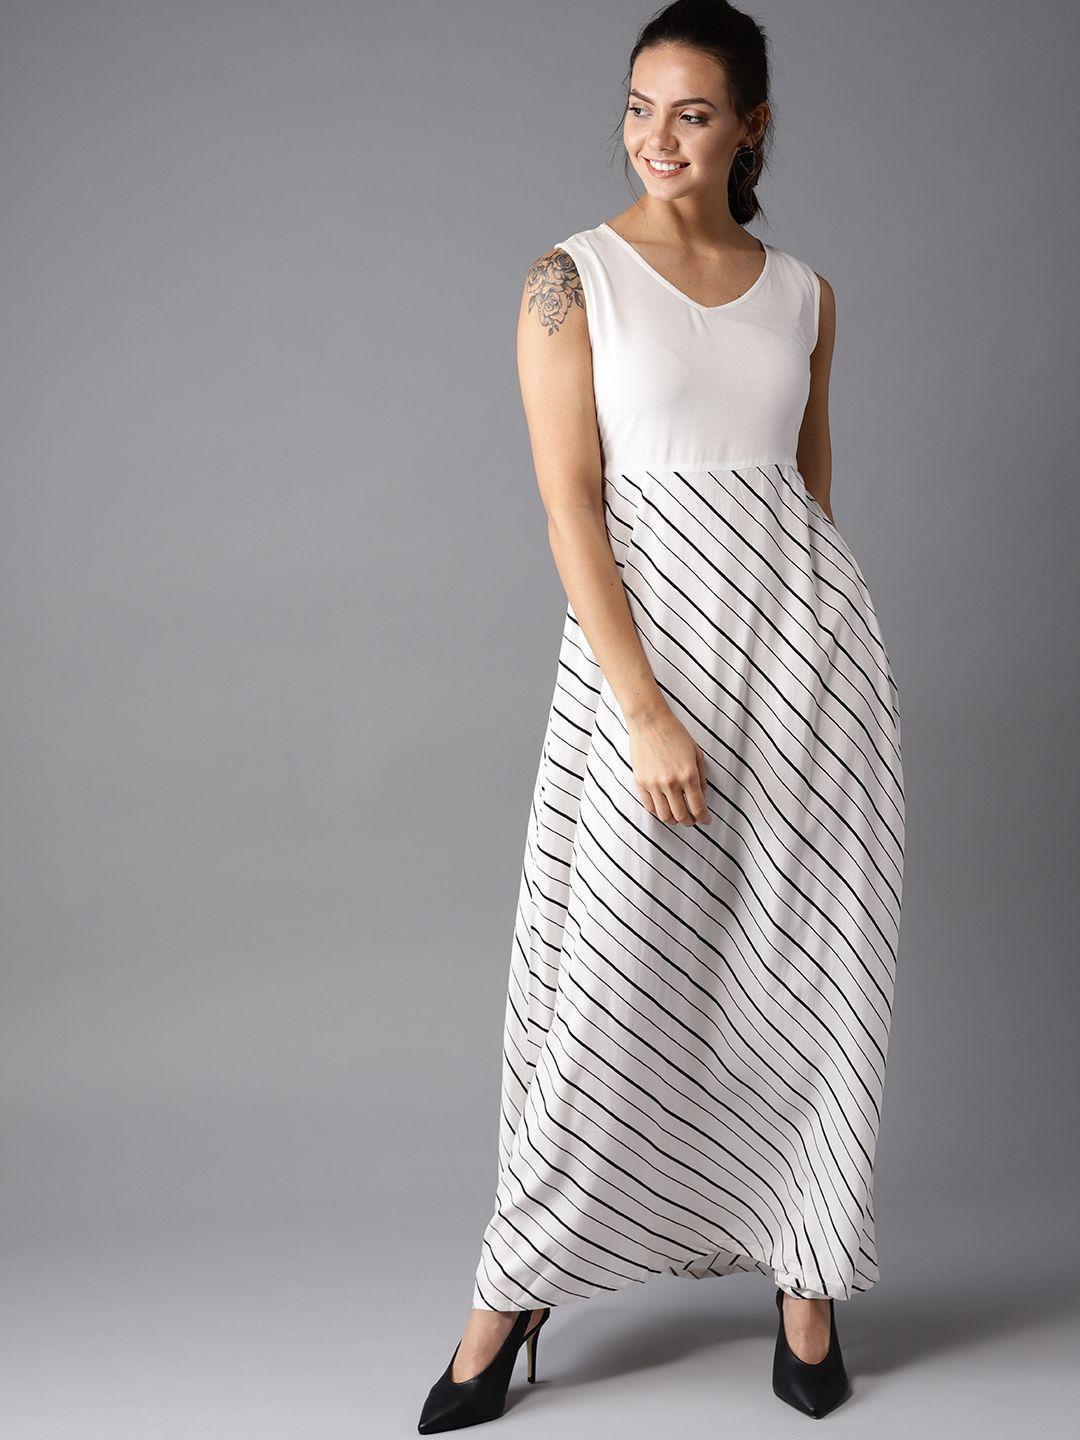 here&now women white & black striped maxi dress